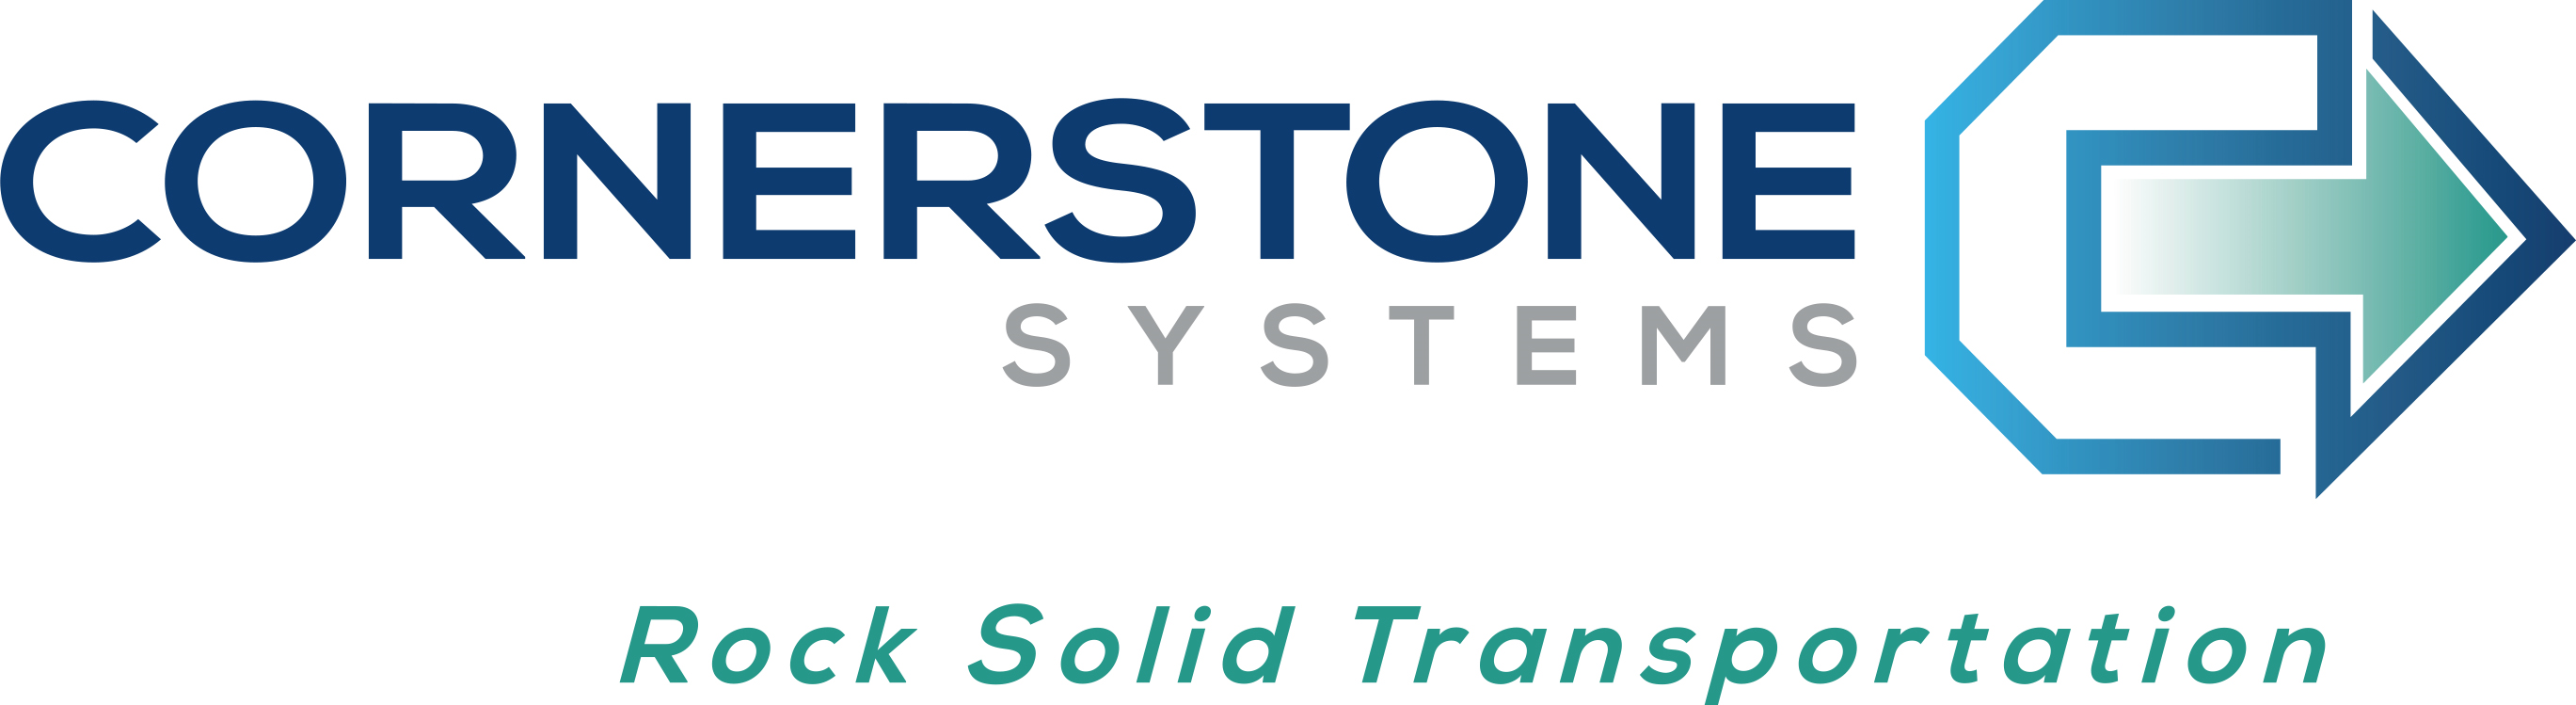 Cornerstone Systems Company Logo